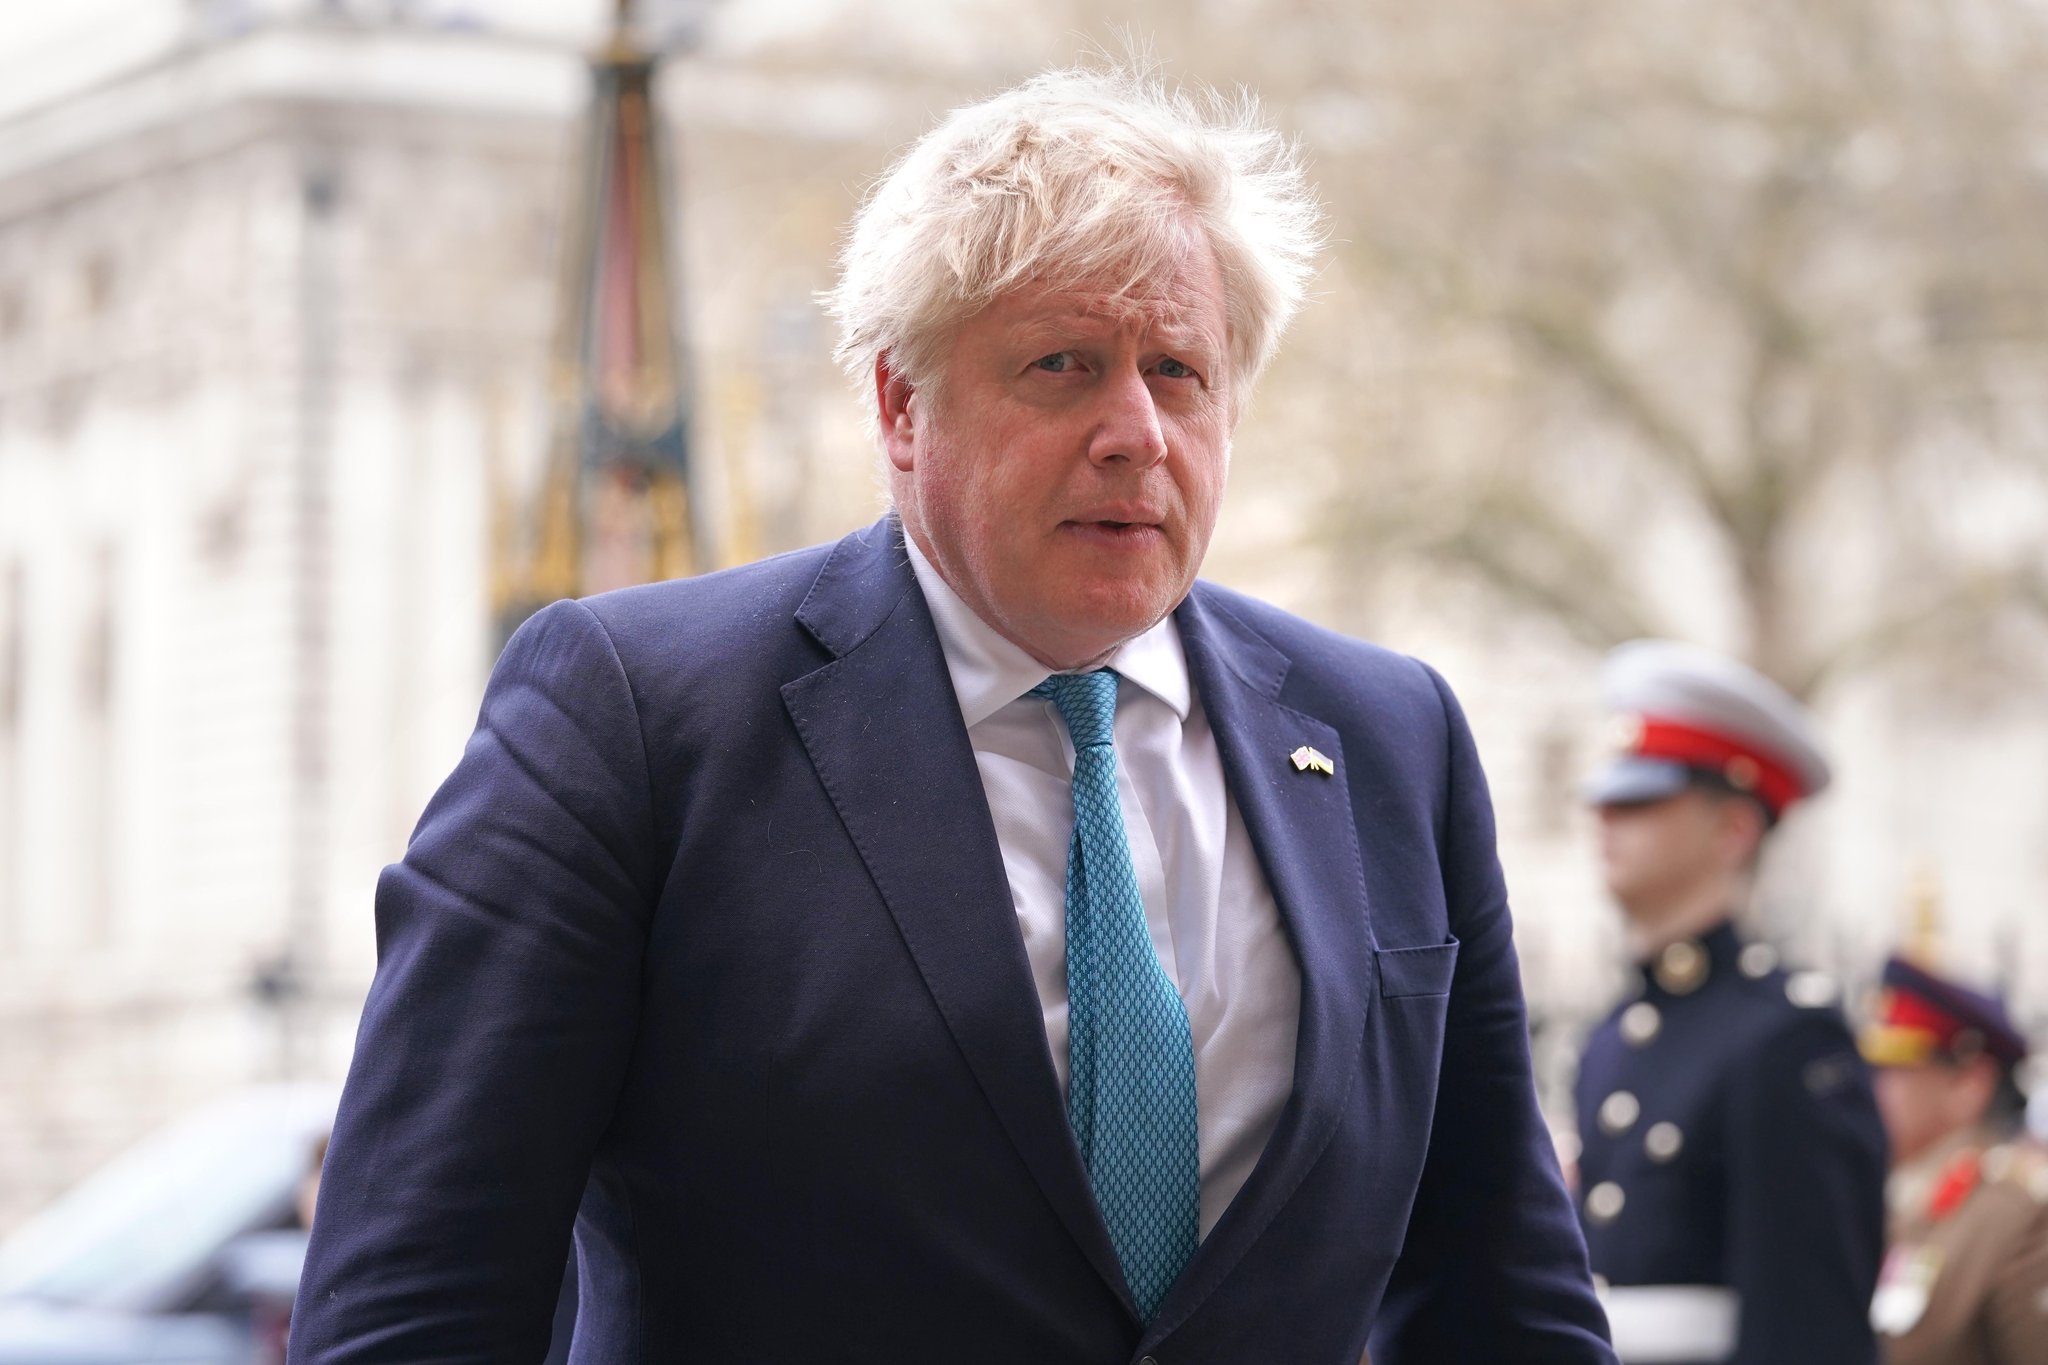 Boris Johnson and Rishi Sunak to be fined over lockdown parties